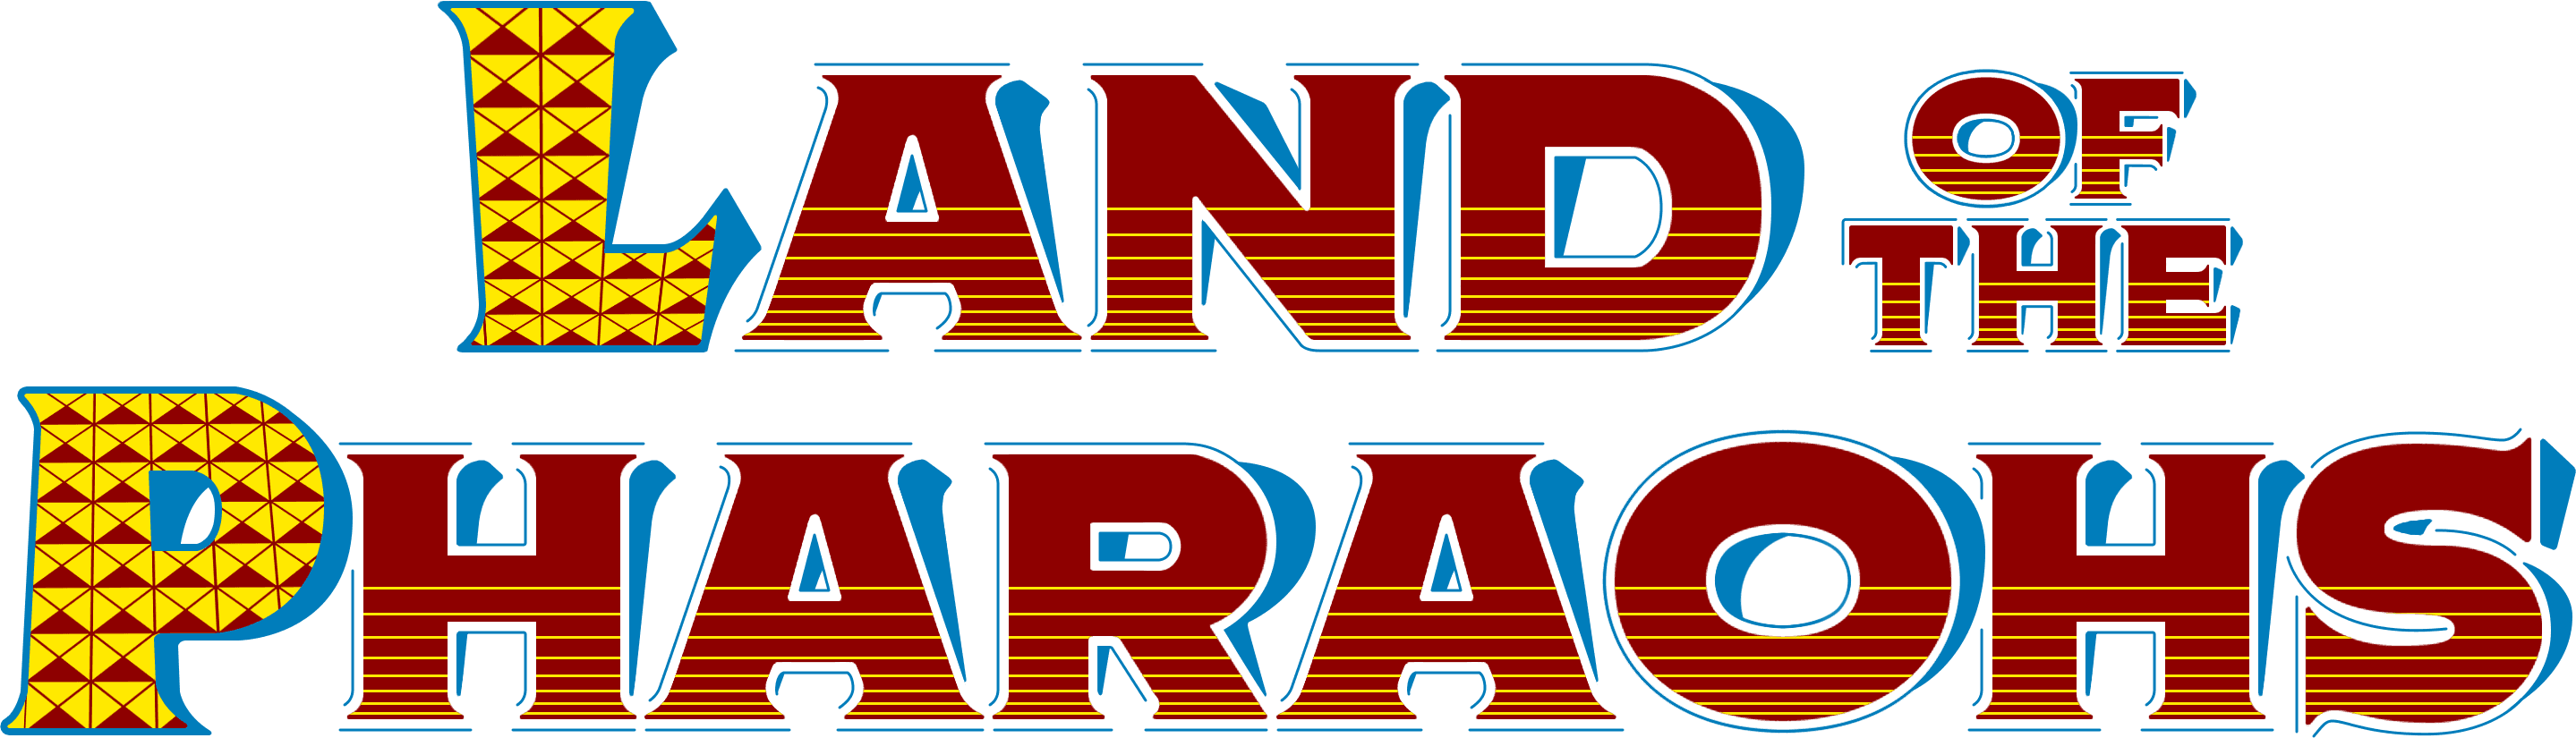 Land of the Pharaohs logo